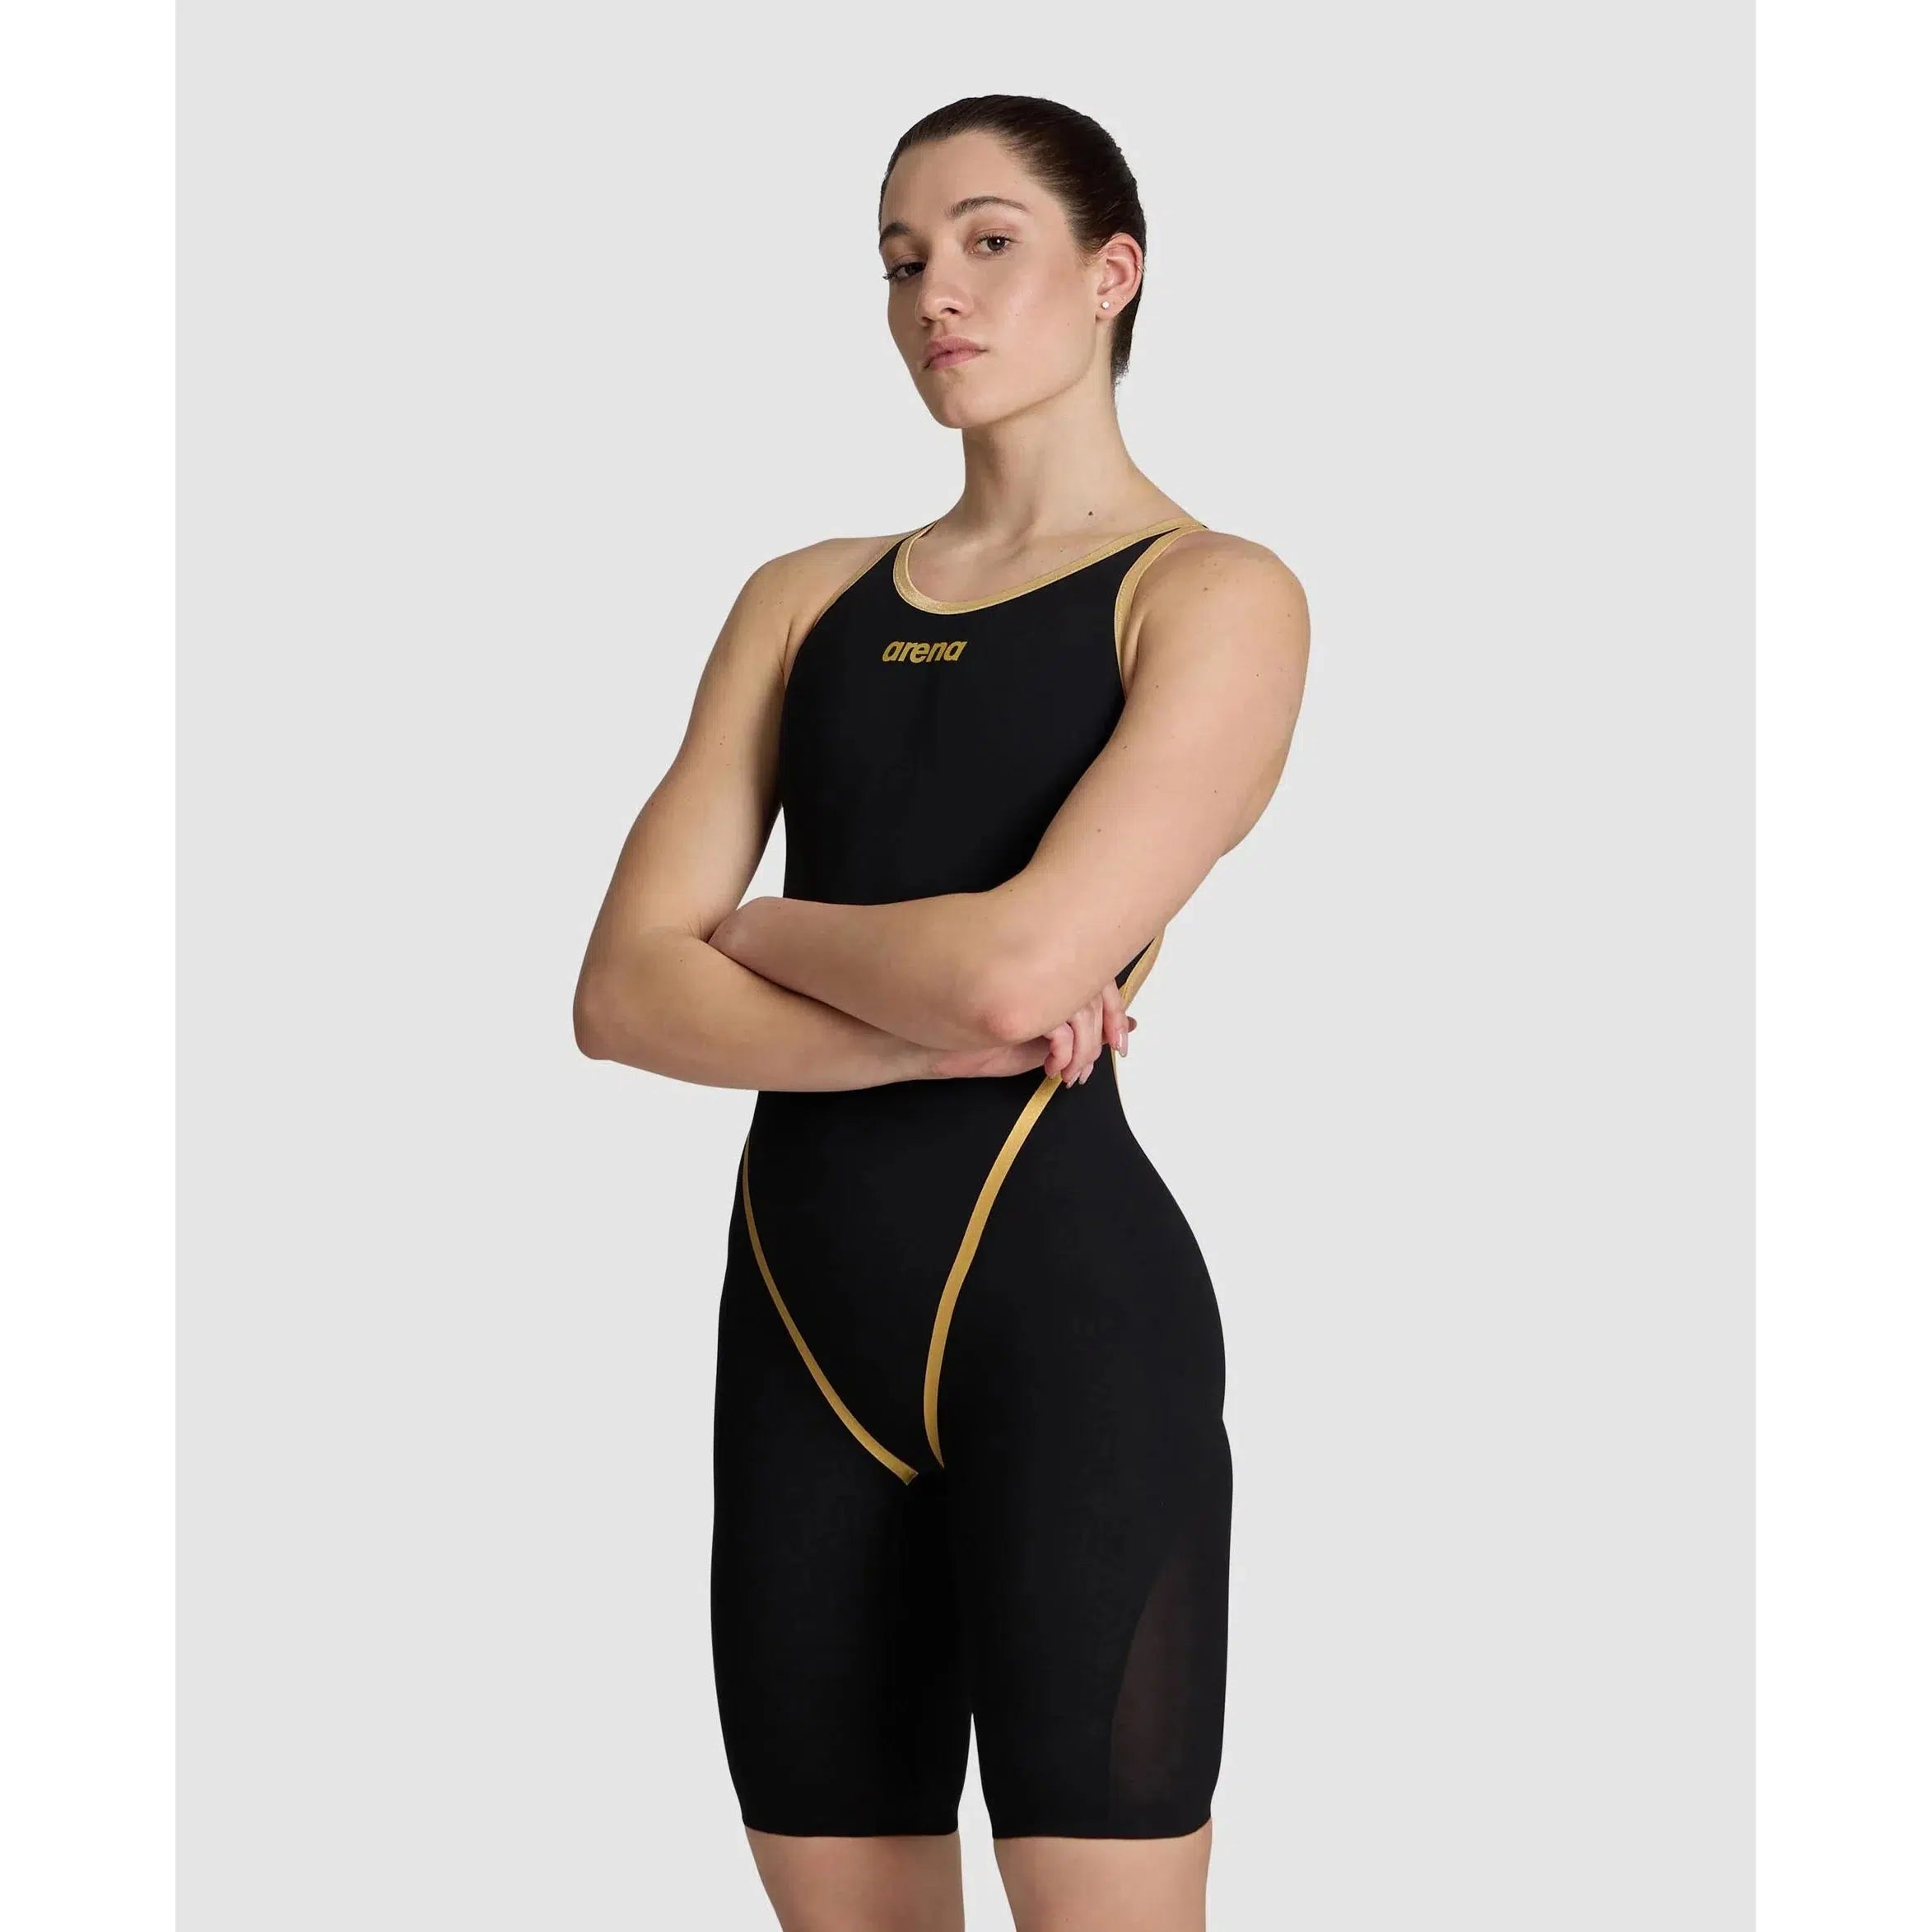 Arena Women's Powerskin Carbon Glide Open Back Tech Suit Swimsuit